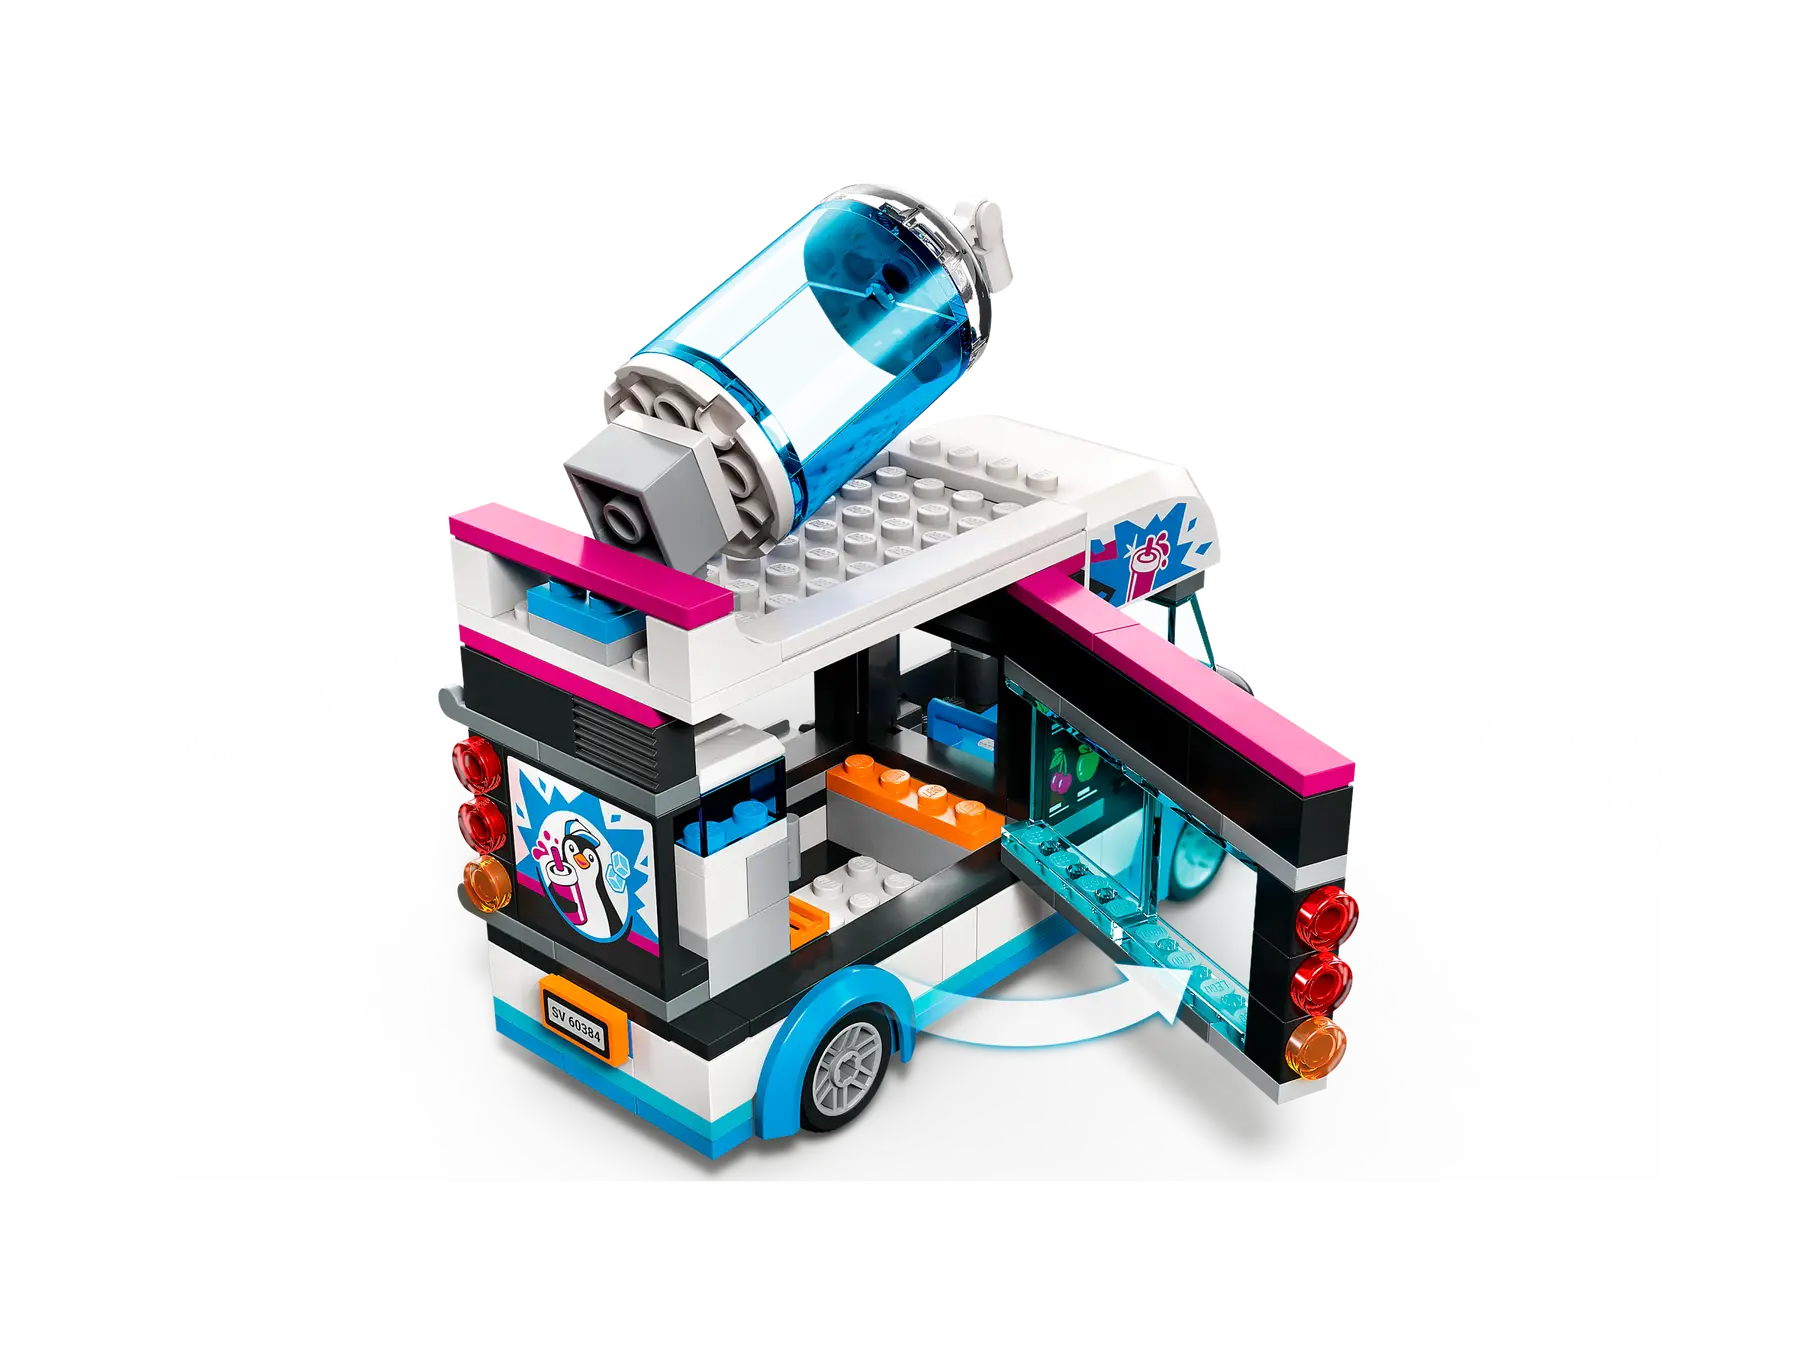 Lego City - Penguin Slushy Van